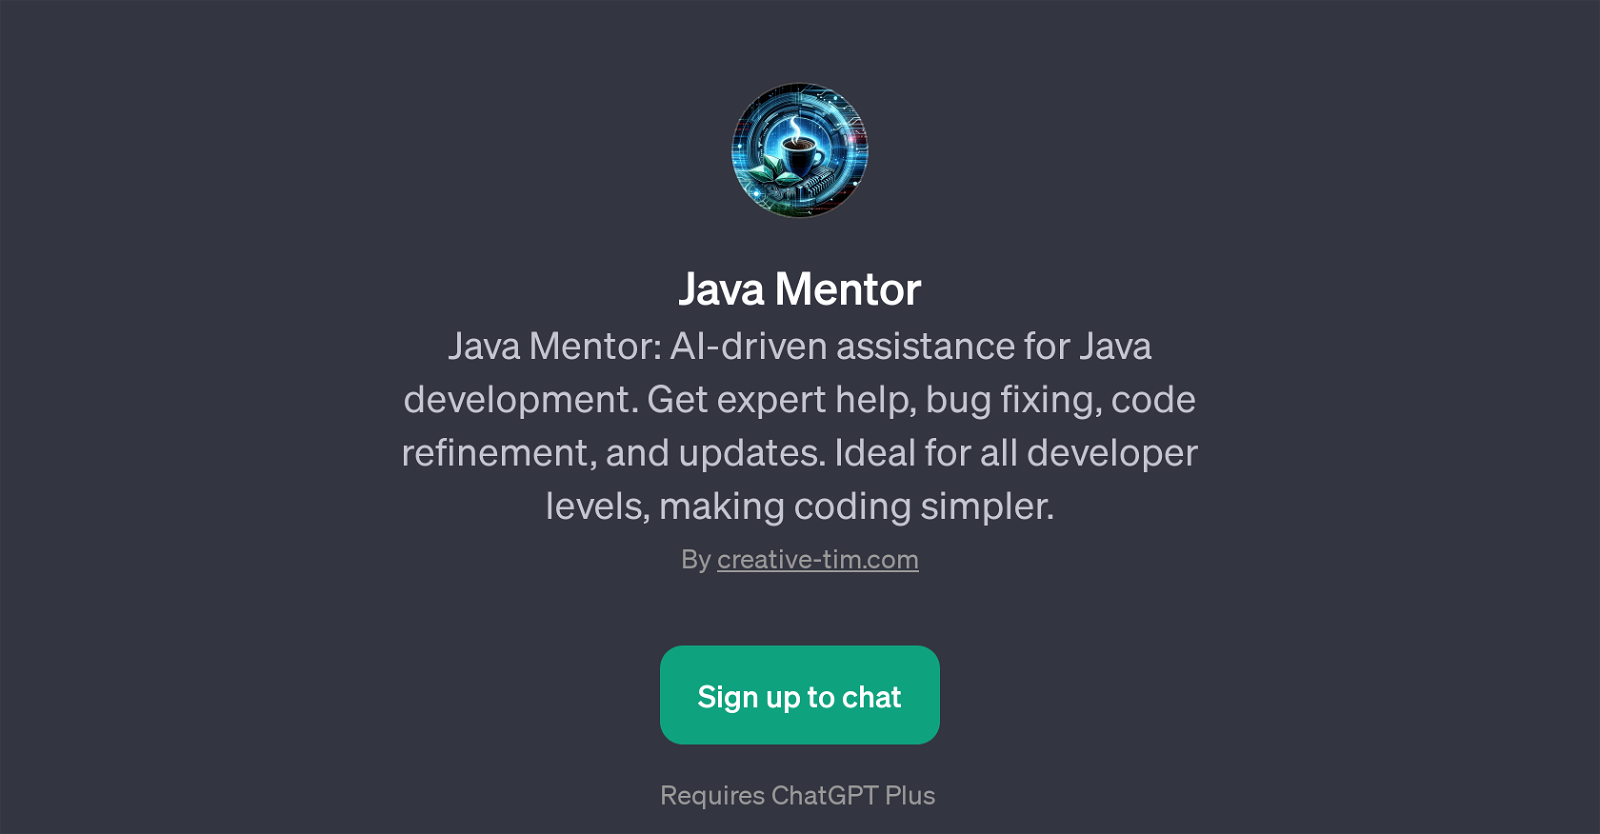 Java Mentor website